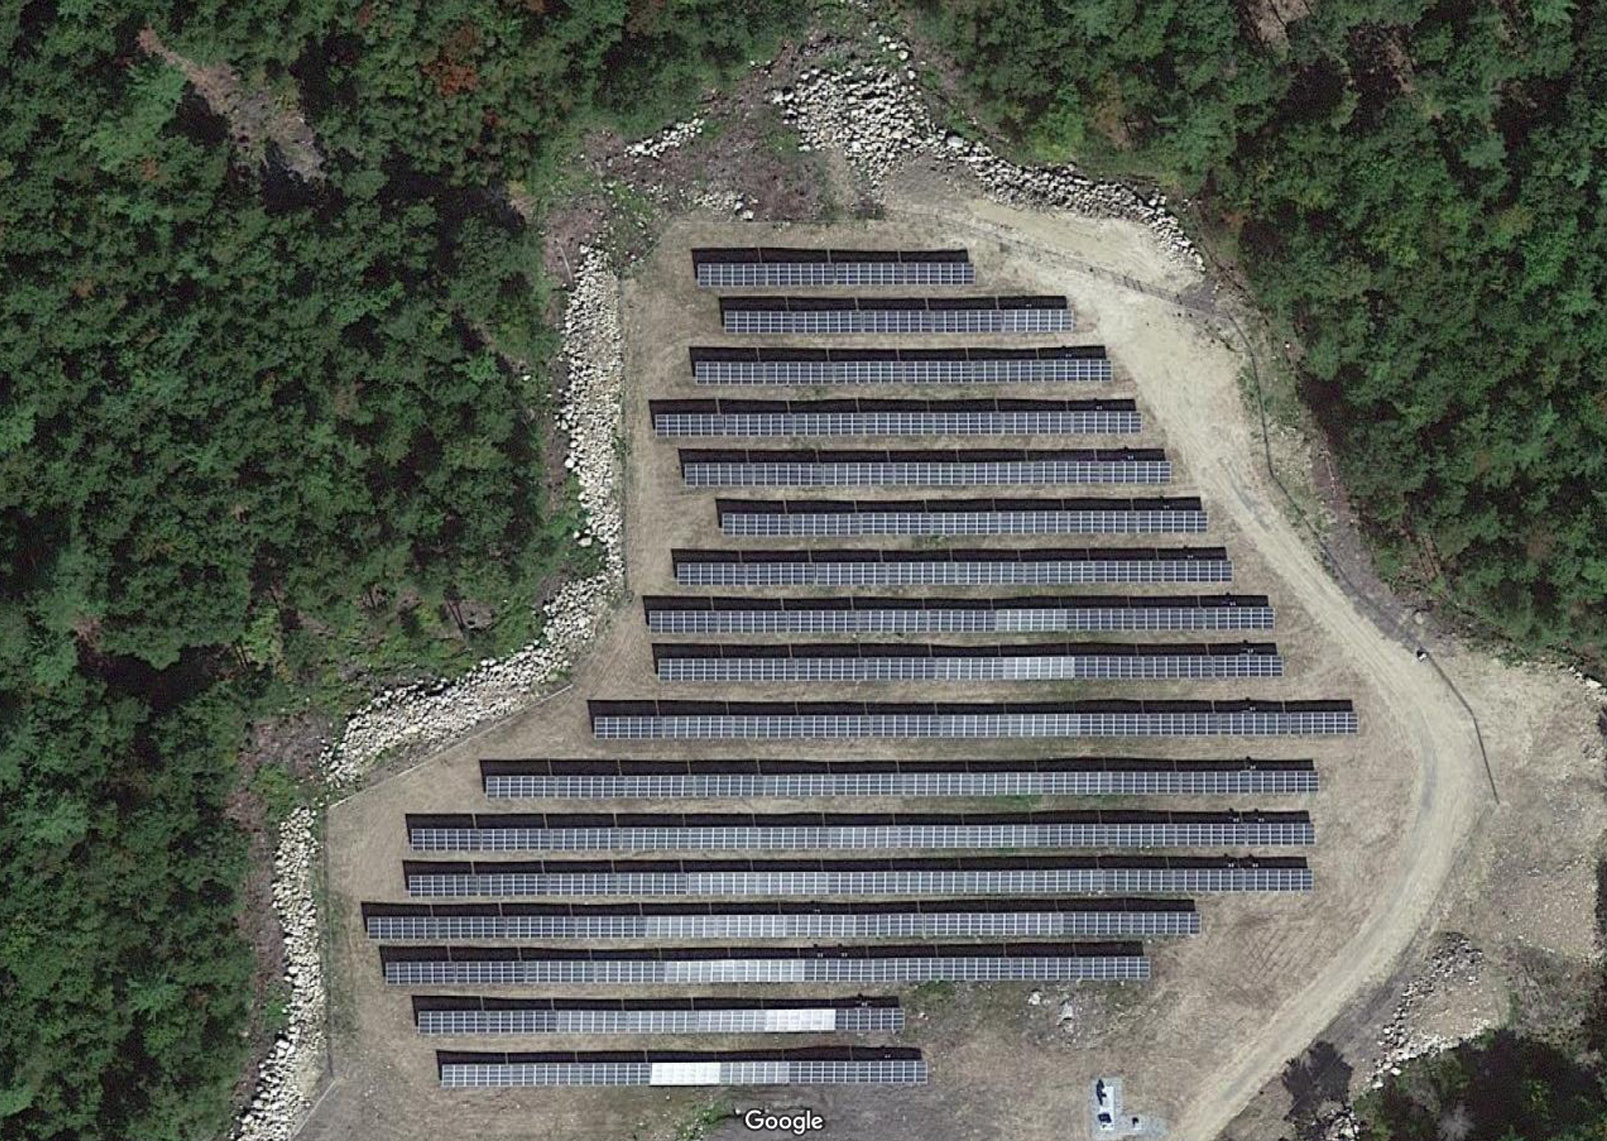 Google satellite view of installation